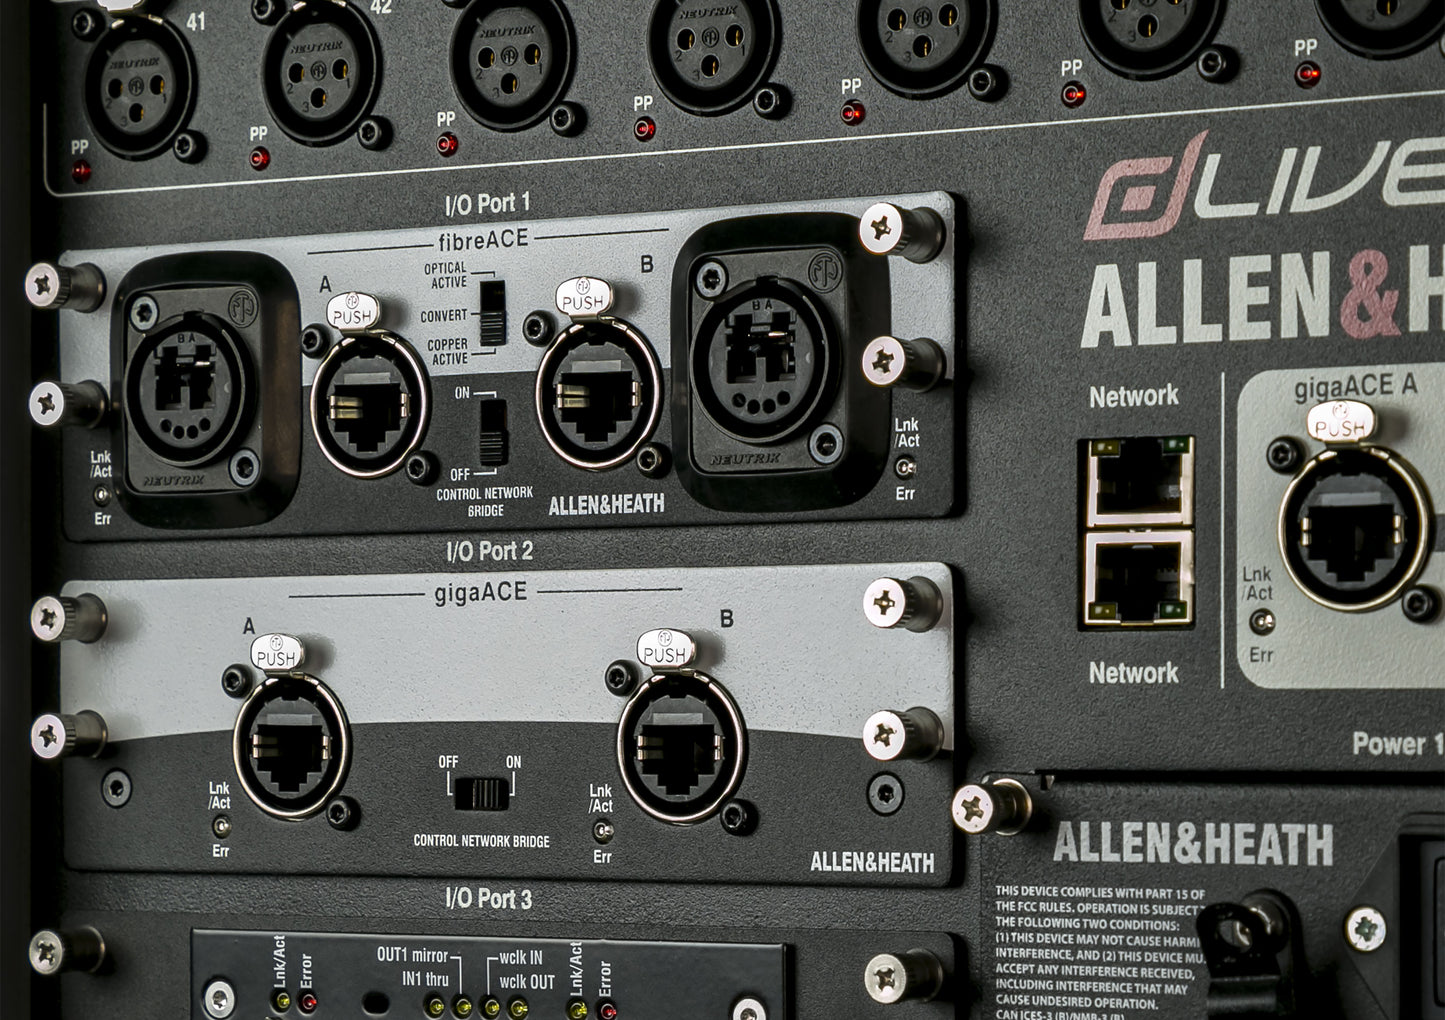 Allen & Heath M-DL-GOPT-A fibreACE dLive Audio Networking Card